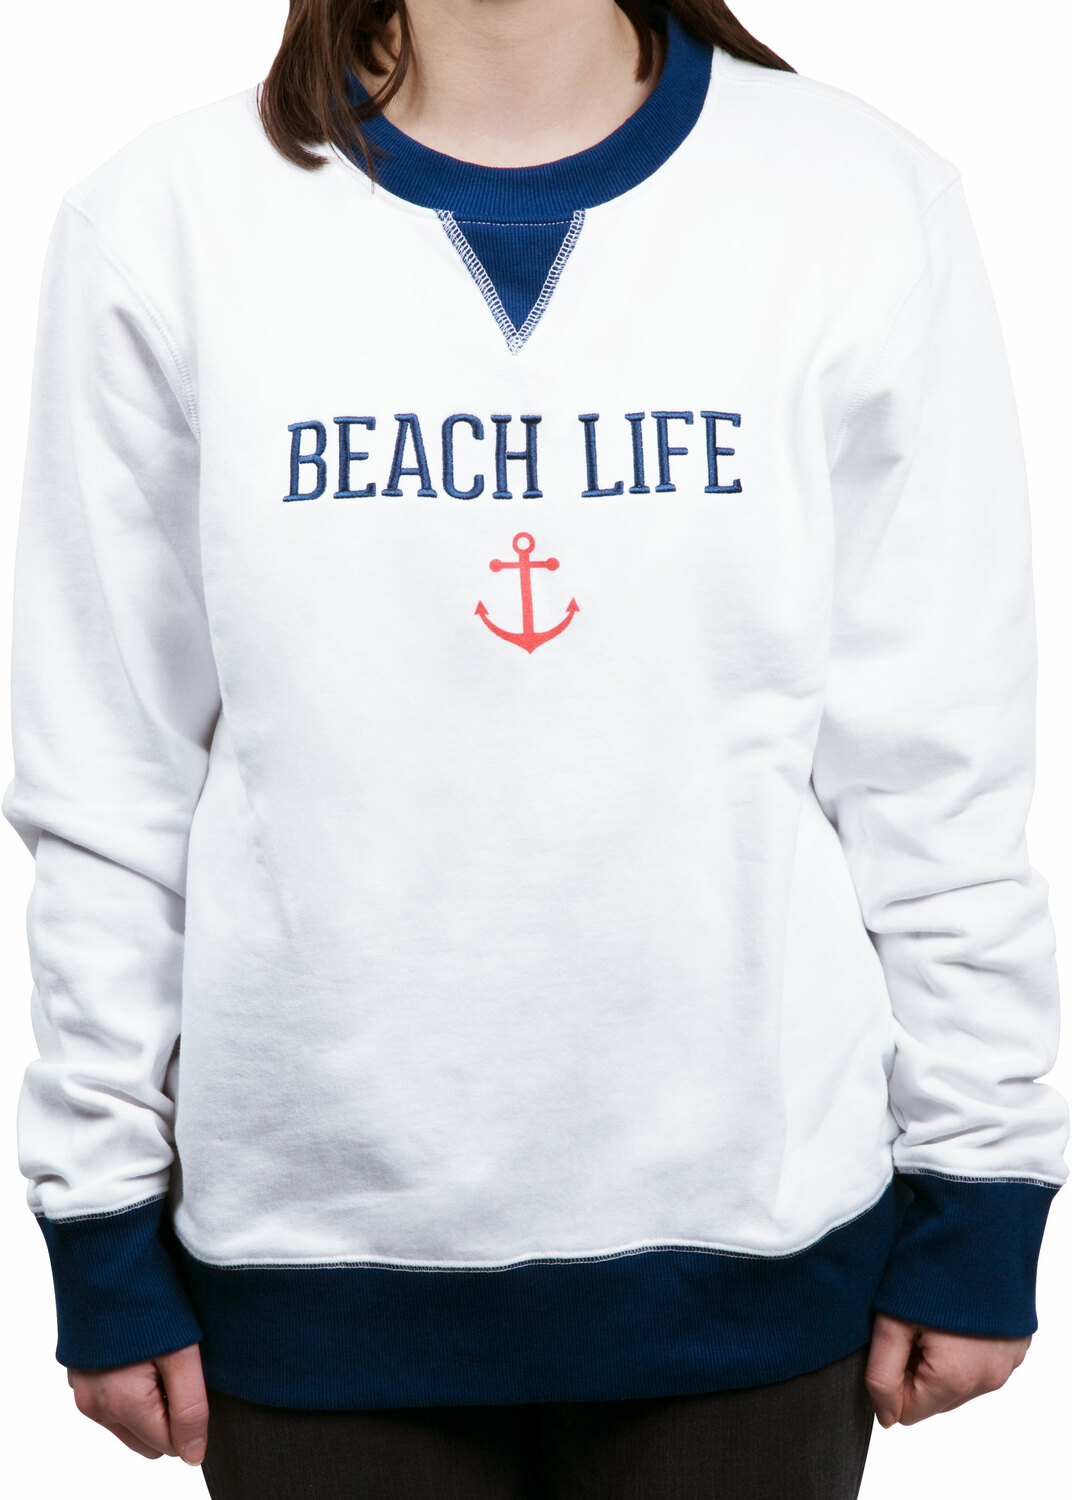 Beach Life by We People - Beach Life - M White Unisex Crewneck Sweatshirt